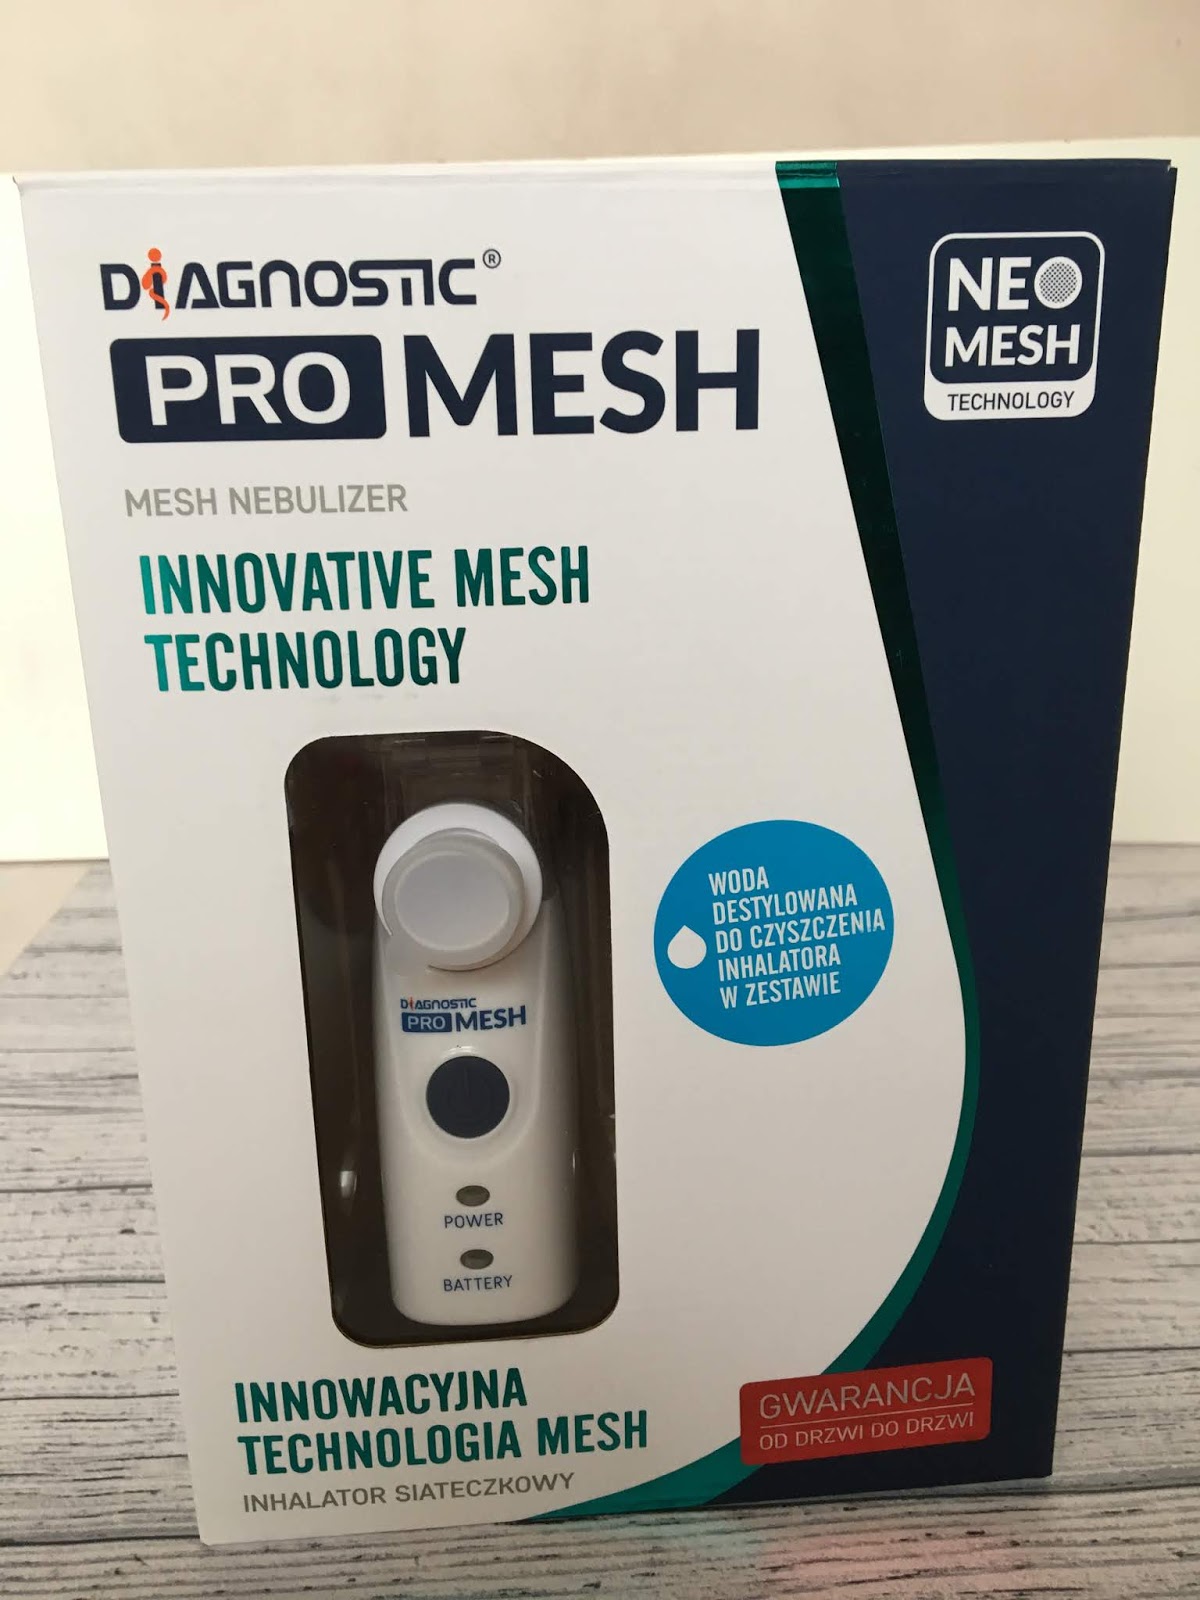 pro mesh diagnostic